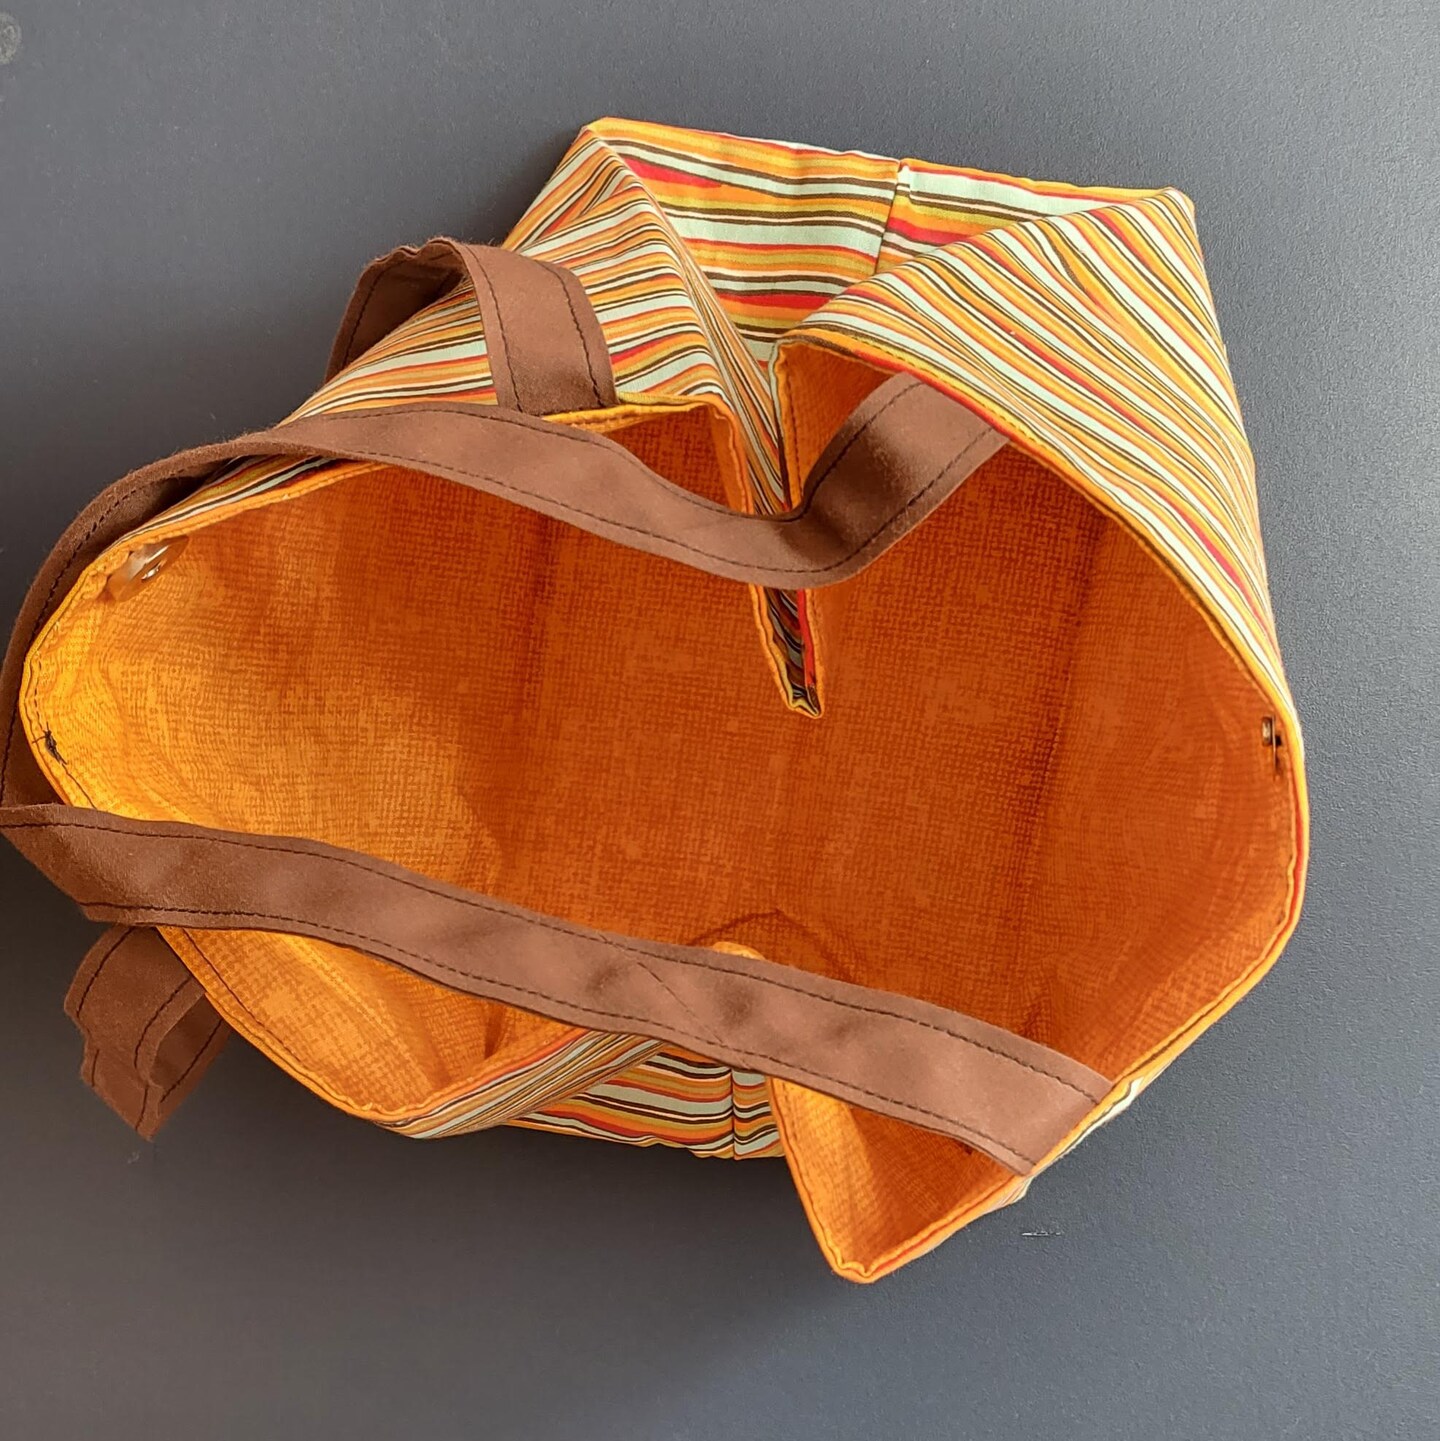 Buy Women's Multicolor Boston Bag Genuine Leather Colorful Large Tote  Handbag Purse (Colorful-Small size) at Amazon.in